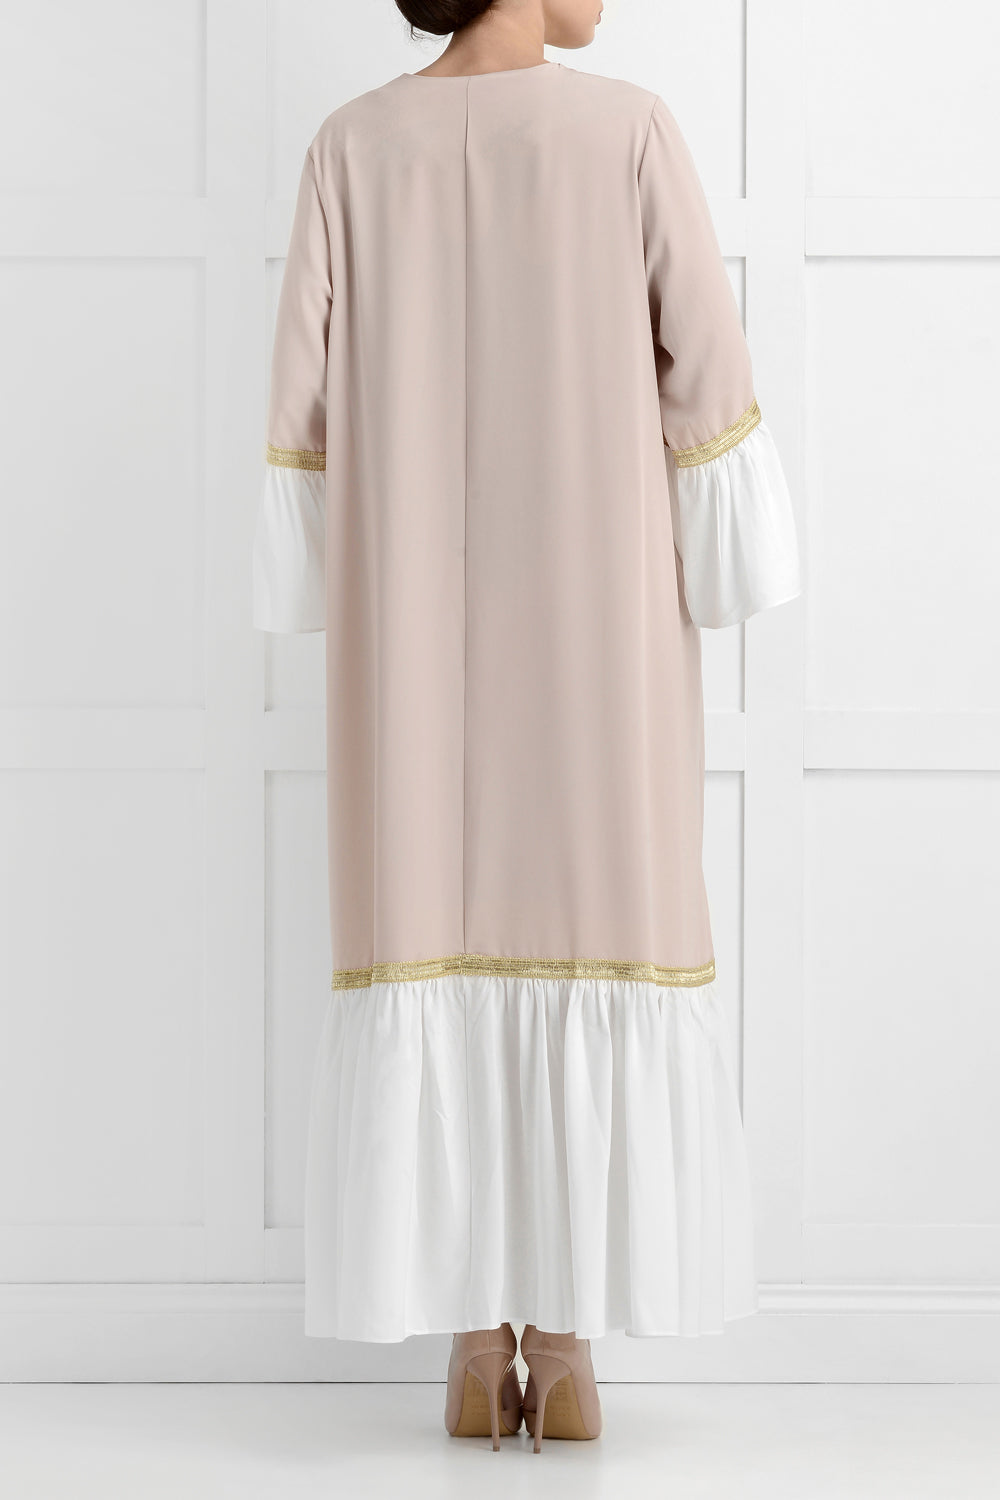 Fareeda Luxury Dress Abaya